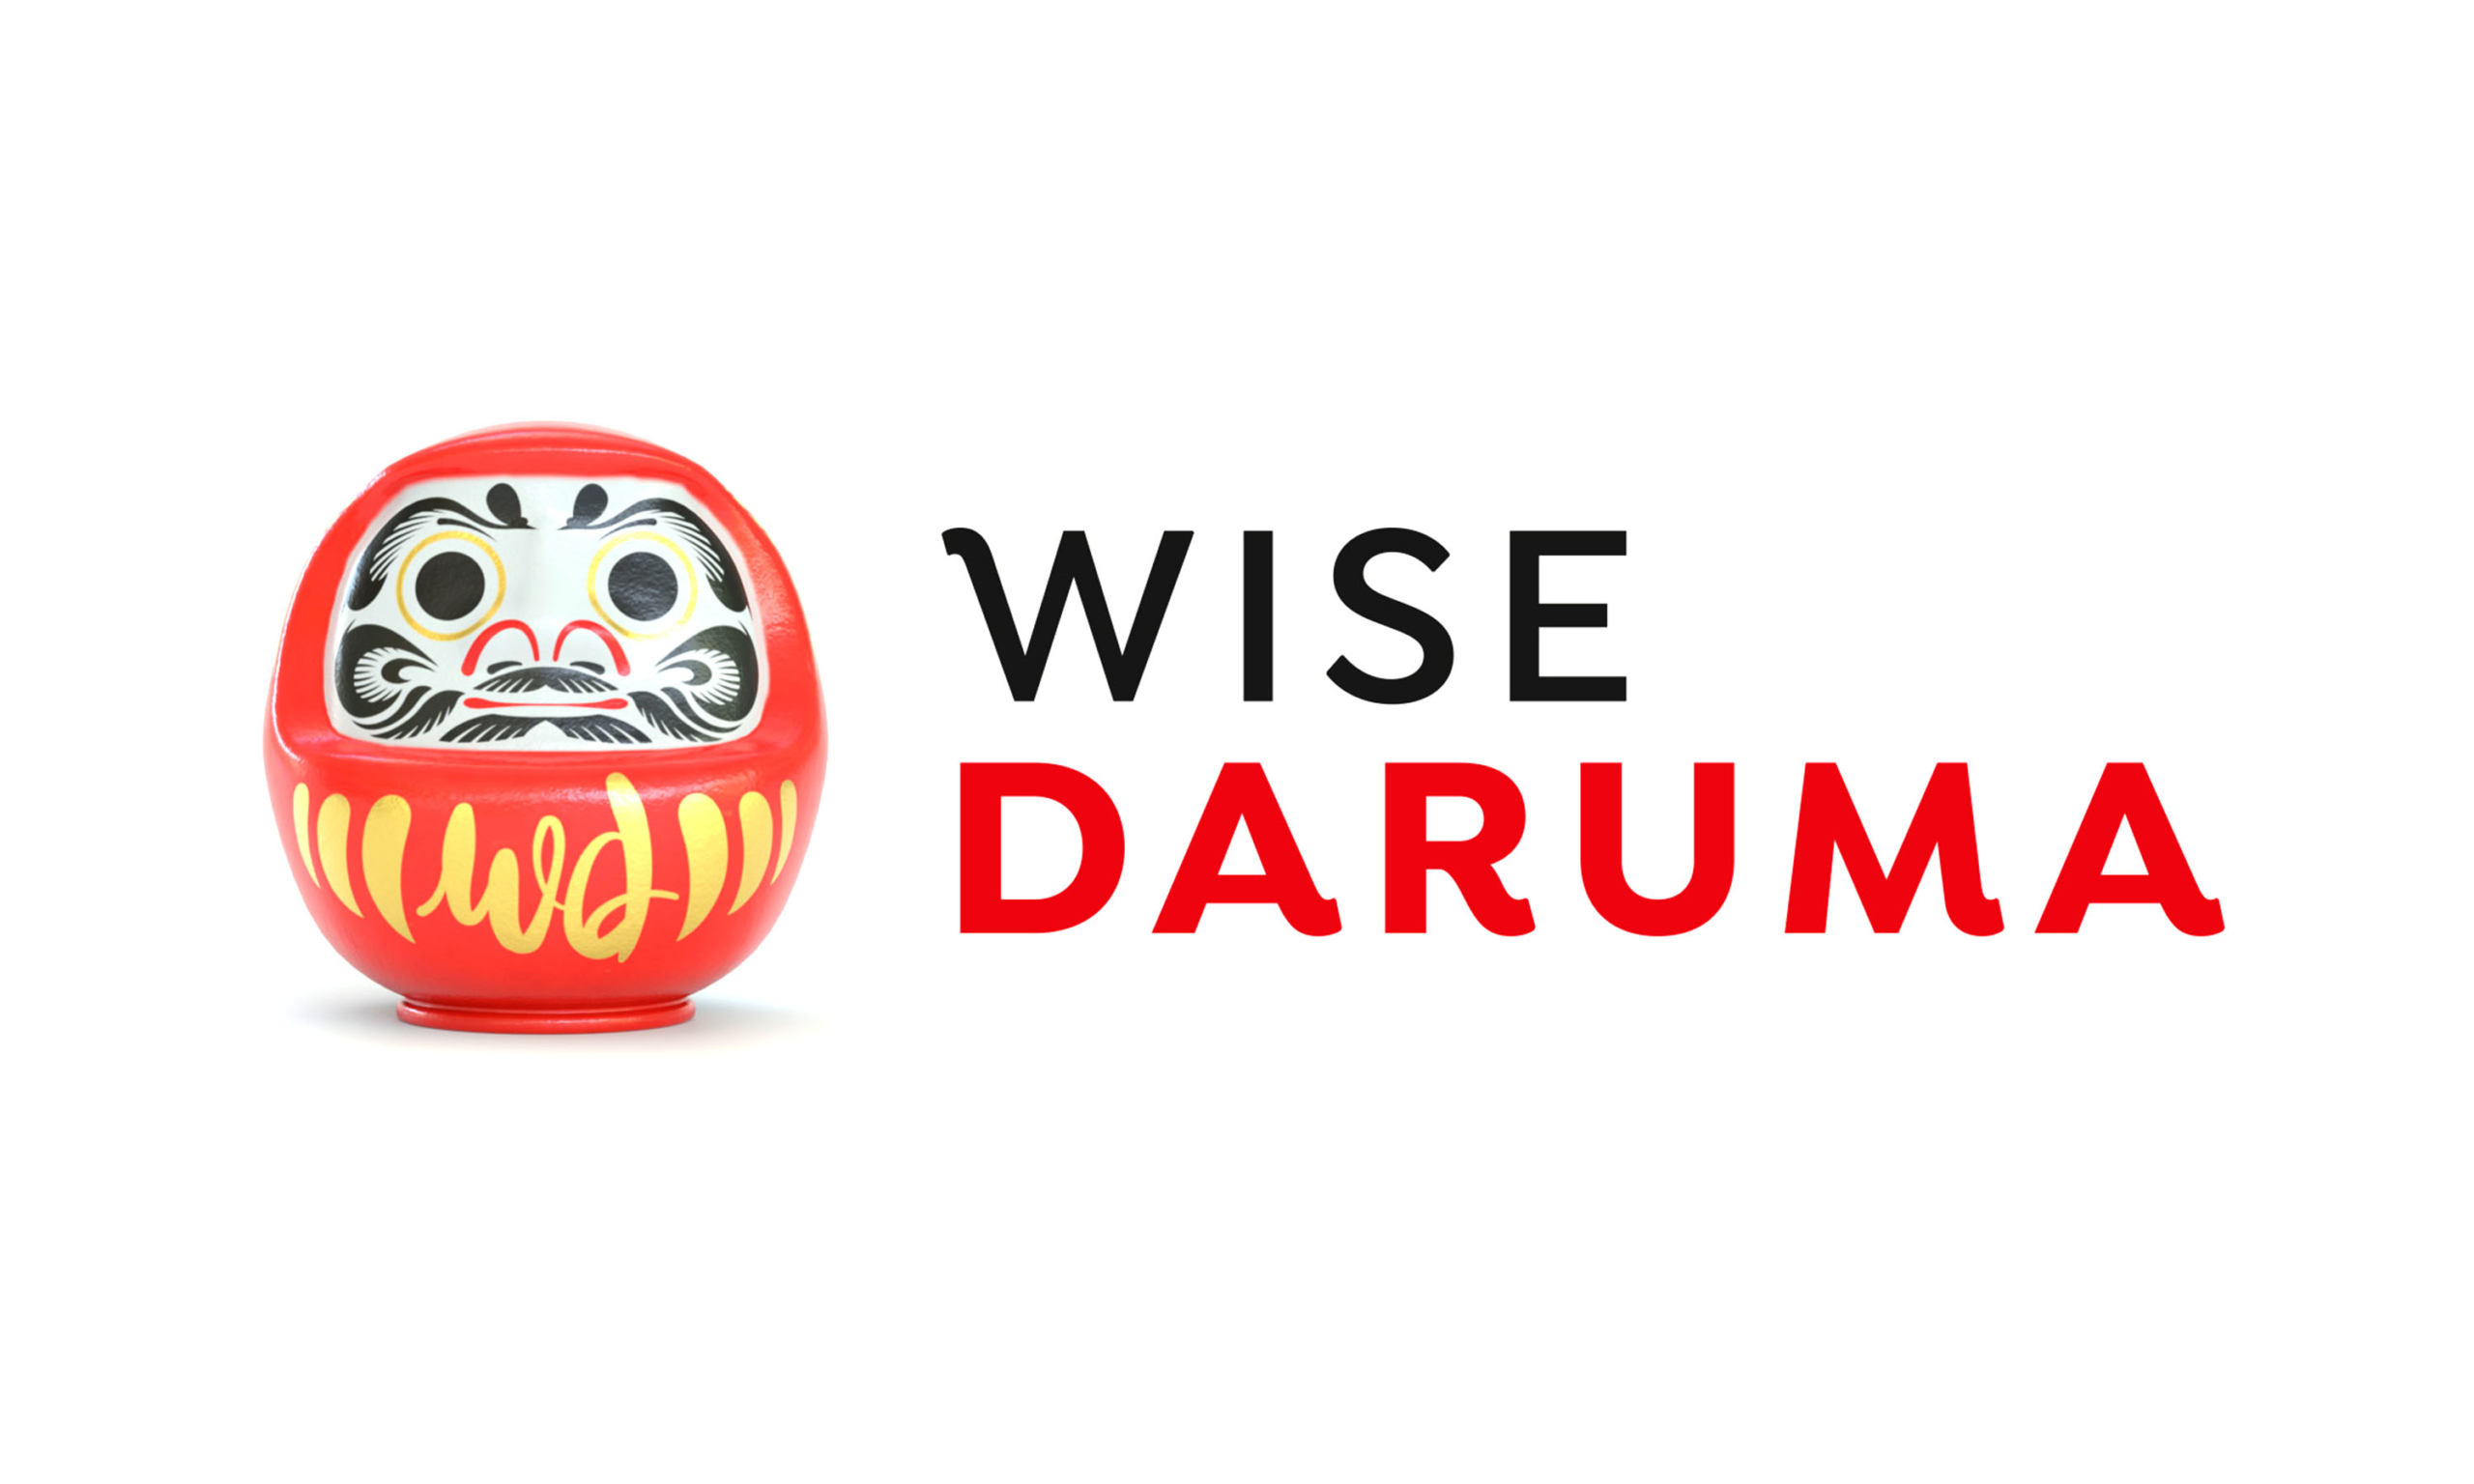 Neon brand consultancy creates the new brand for Wise Daruma